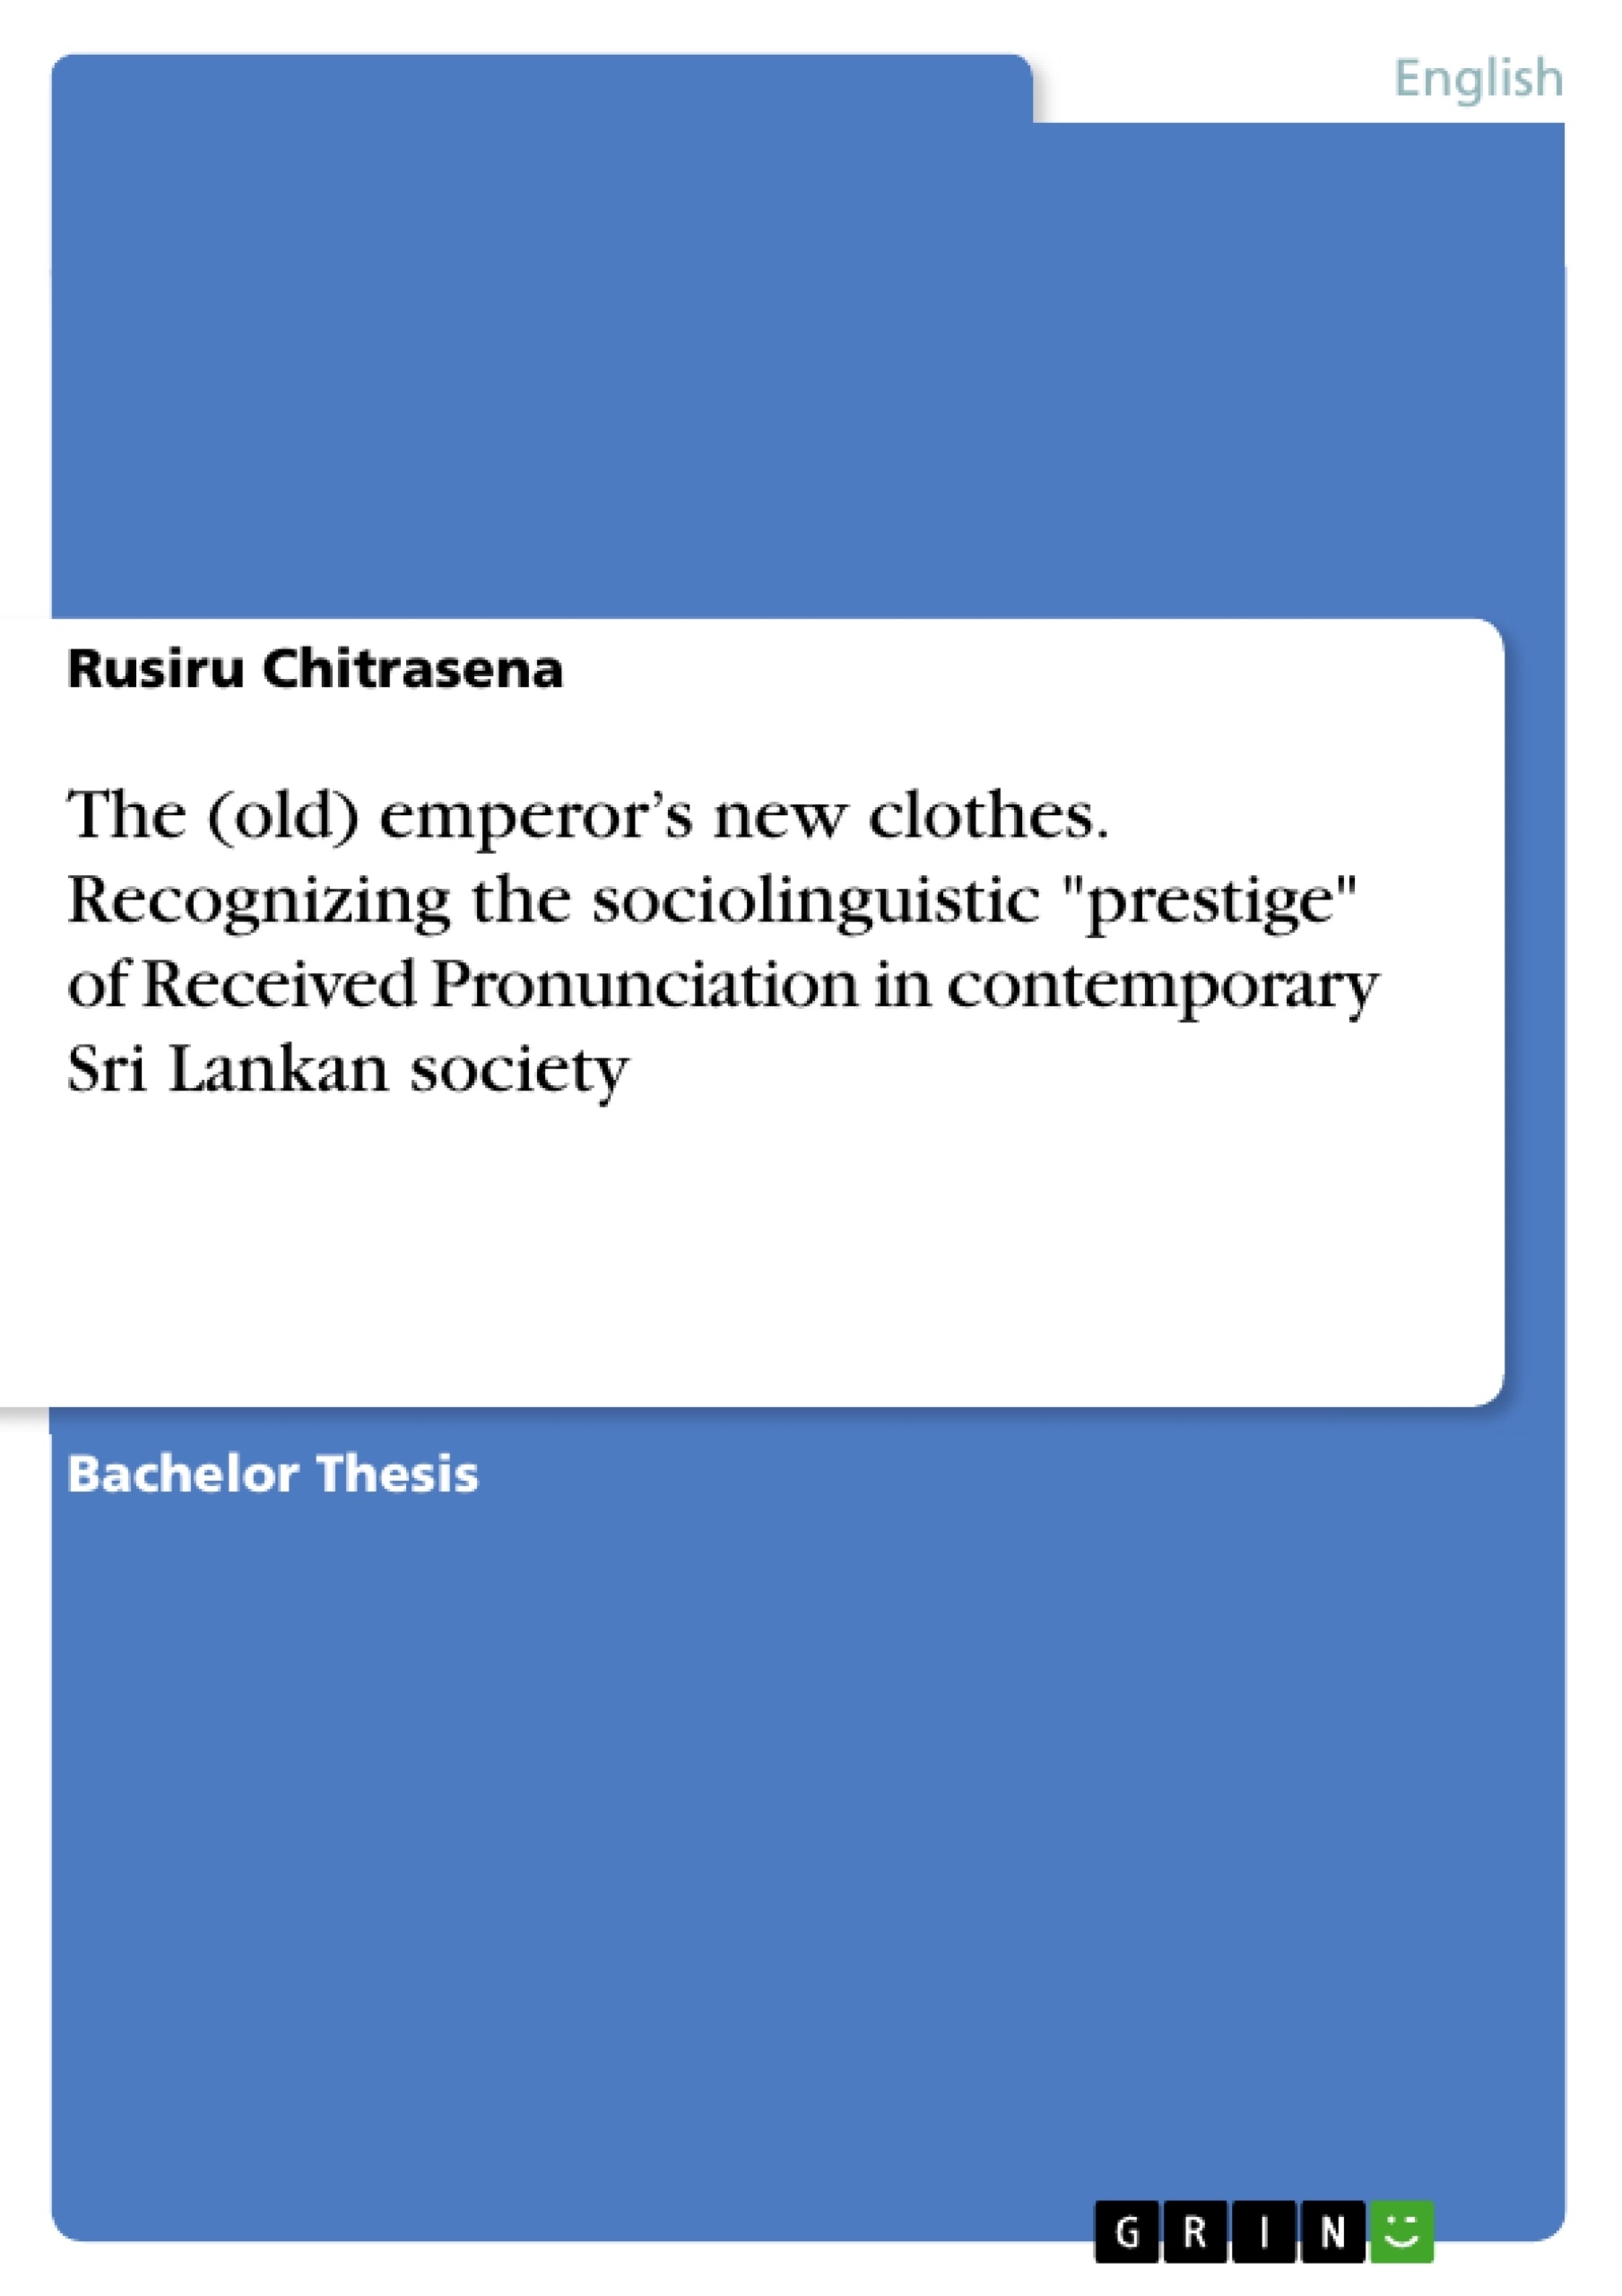 Titre: The (old) emperor’s new clothes. Recognizing the sociolinguistic "prestige" of Received Pronunciation in contemporary Sri Lankan society